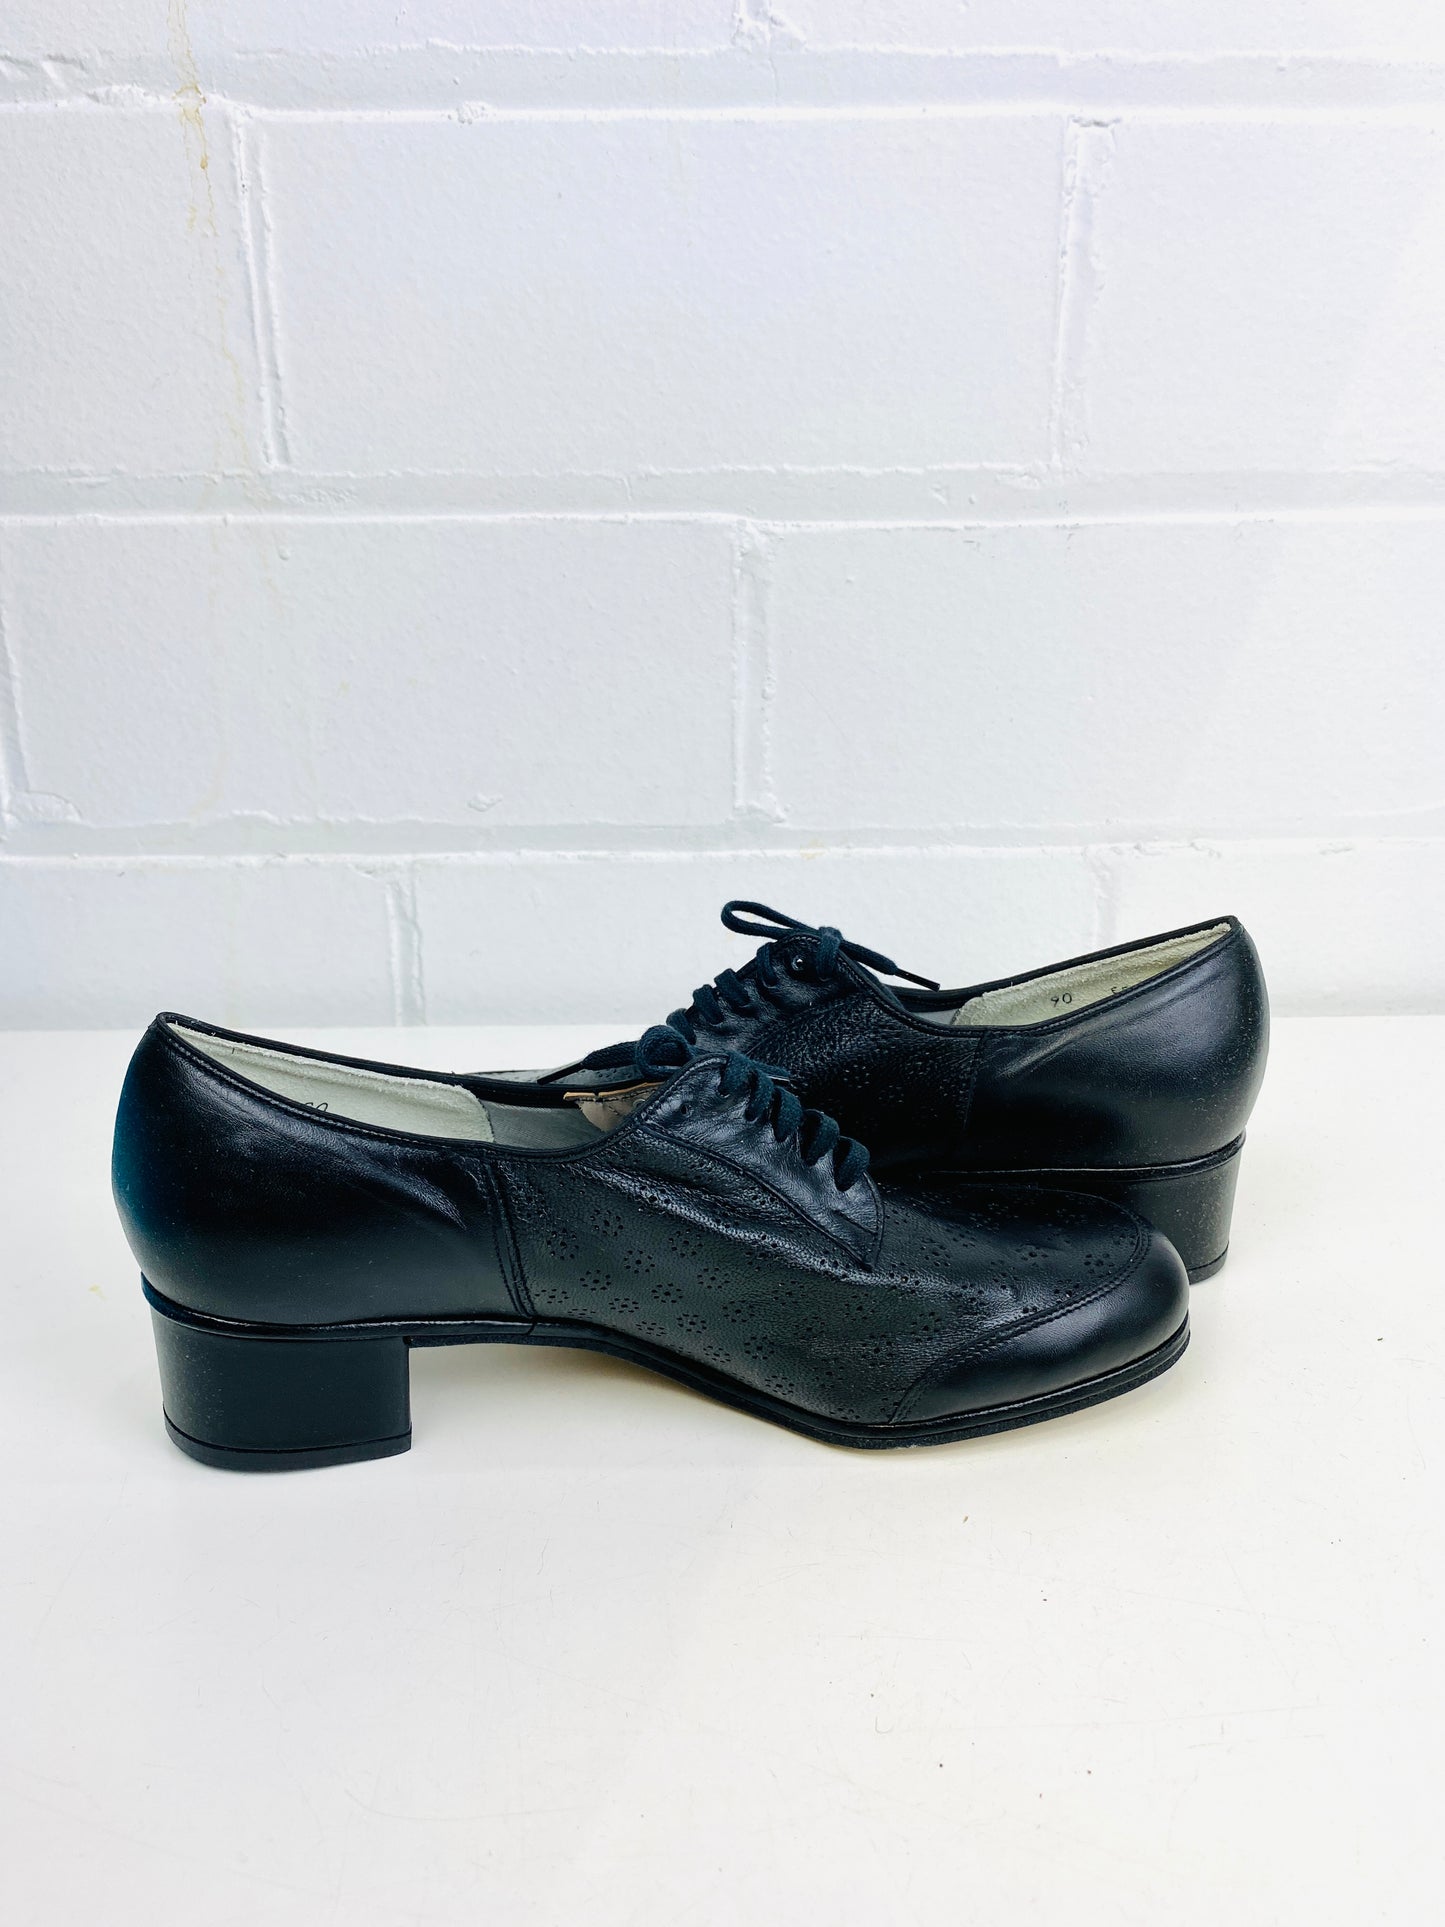 Vintage Deadstock Shoes, Women's 1980s Black Leather Cuban Heel Oxfords, NOS, 1616